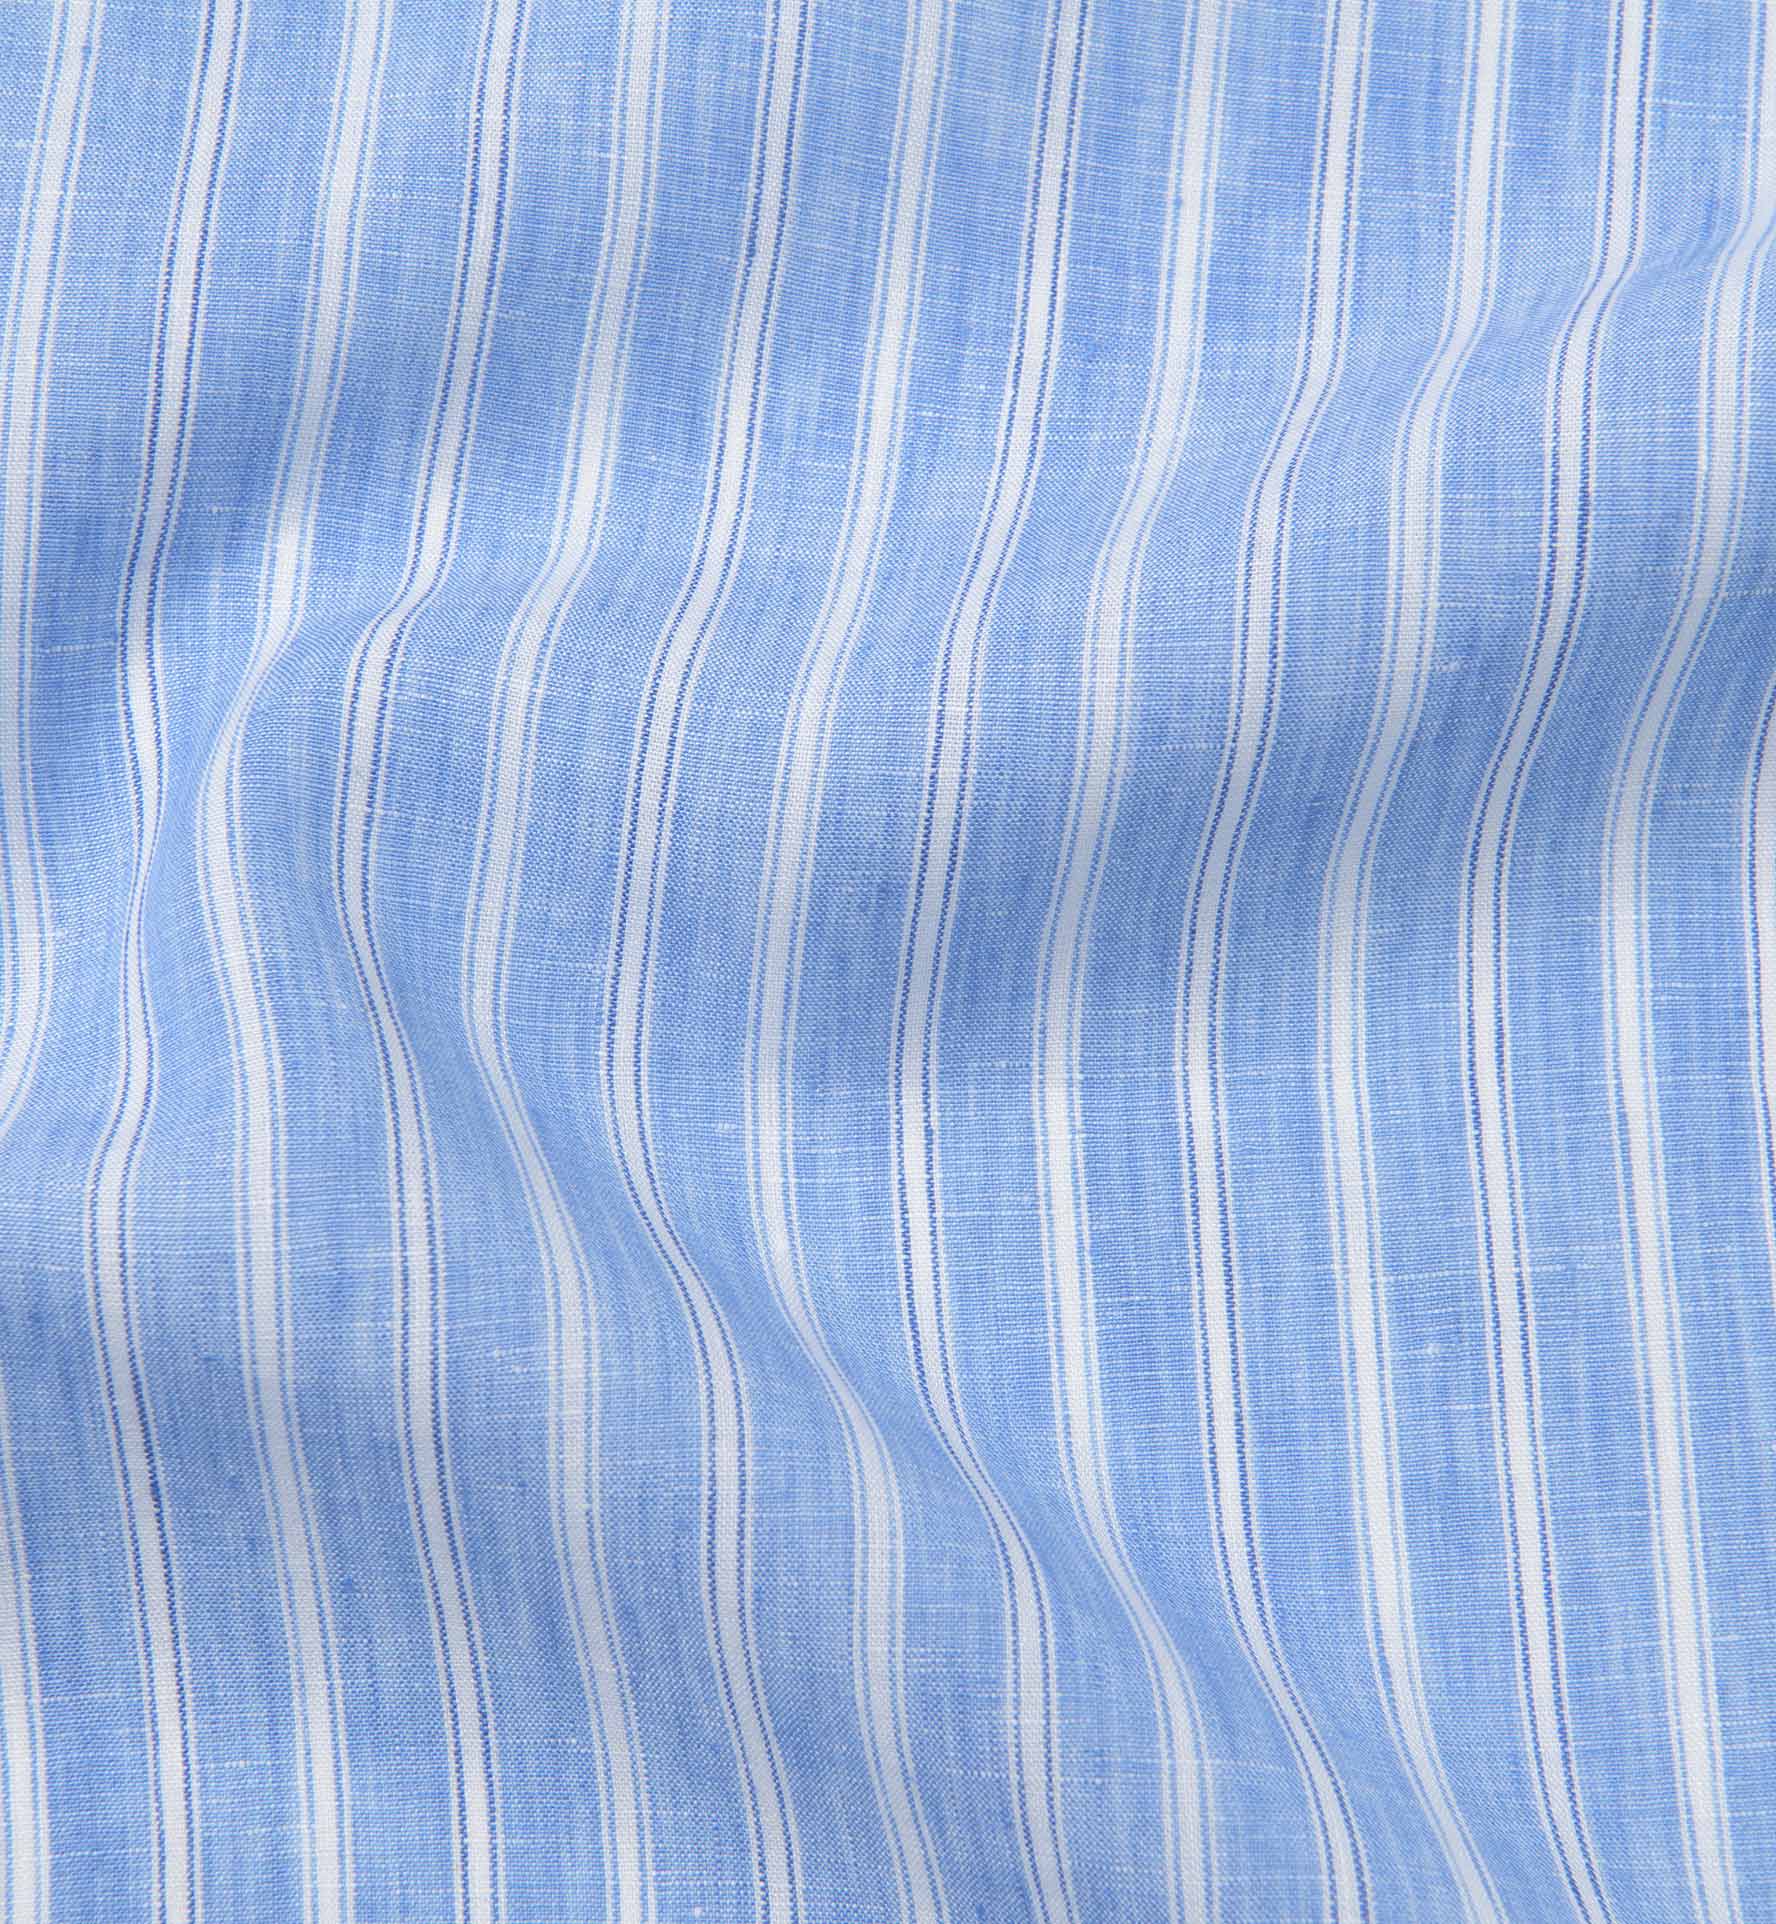 Grandi and Rubinelli Border Stripe Linen Shirts by Proper Cloth